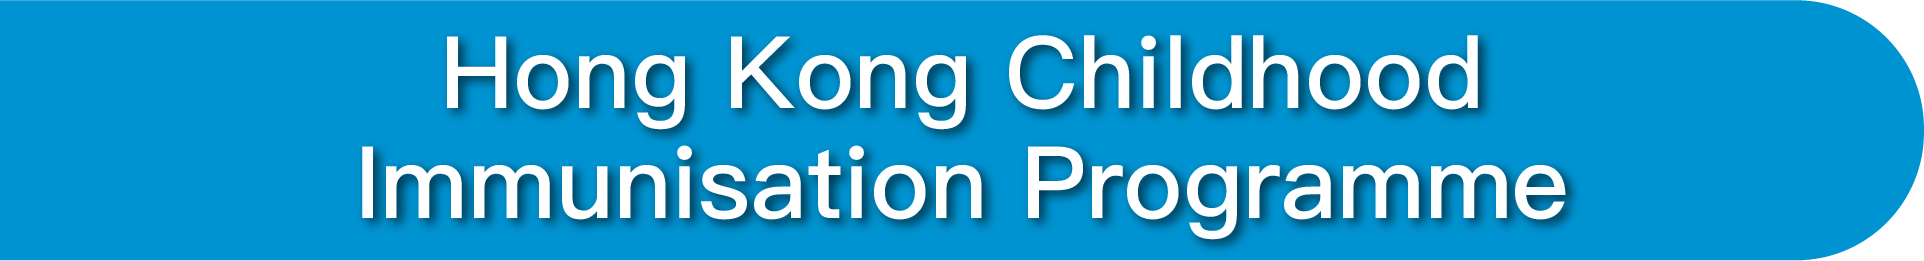 Hong Kong Childhood Immunisation Programme